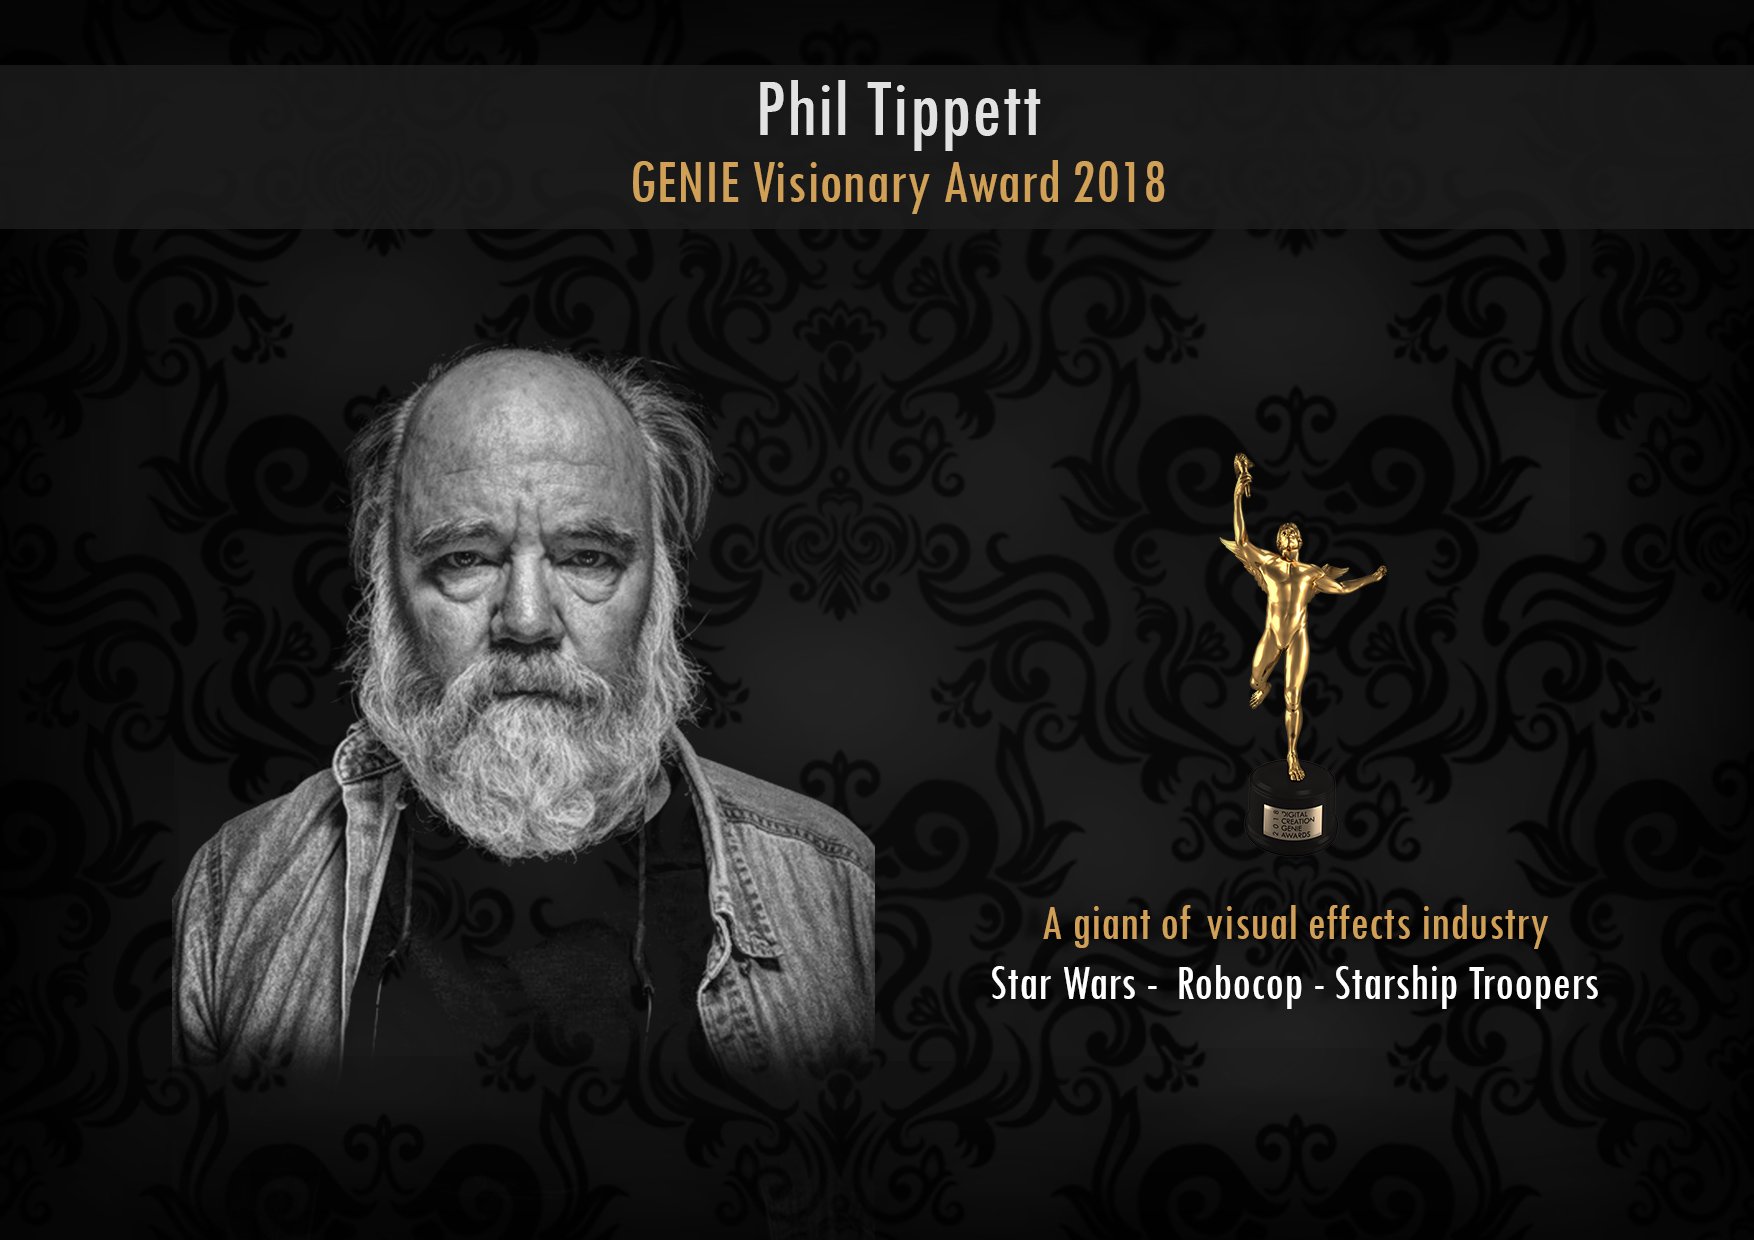 Phil Tippett